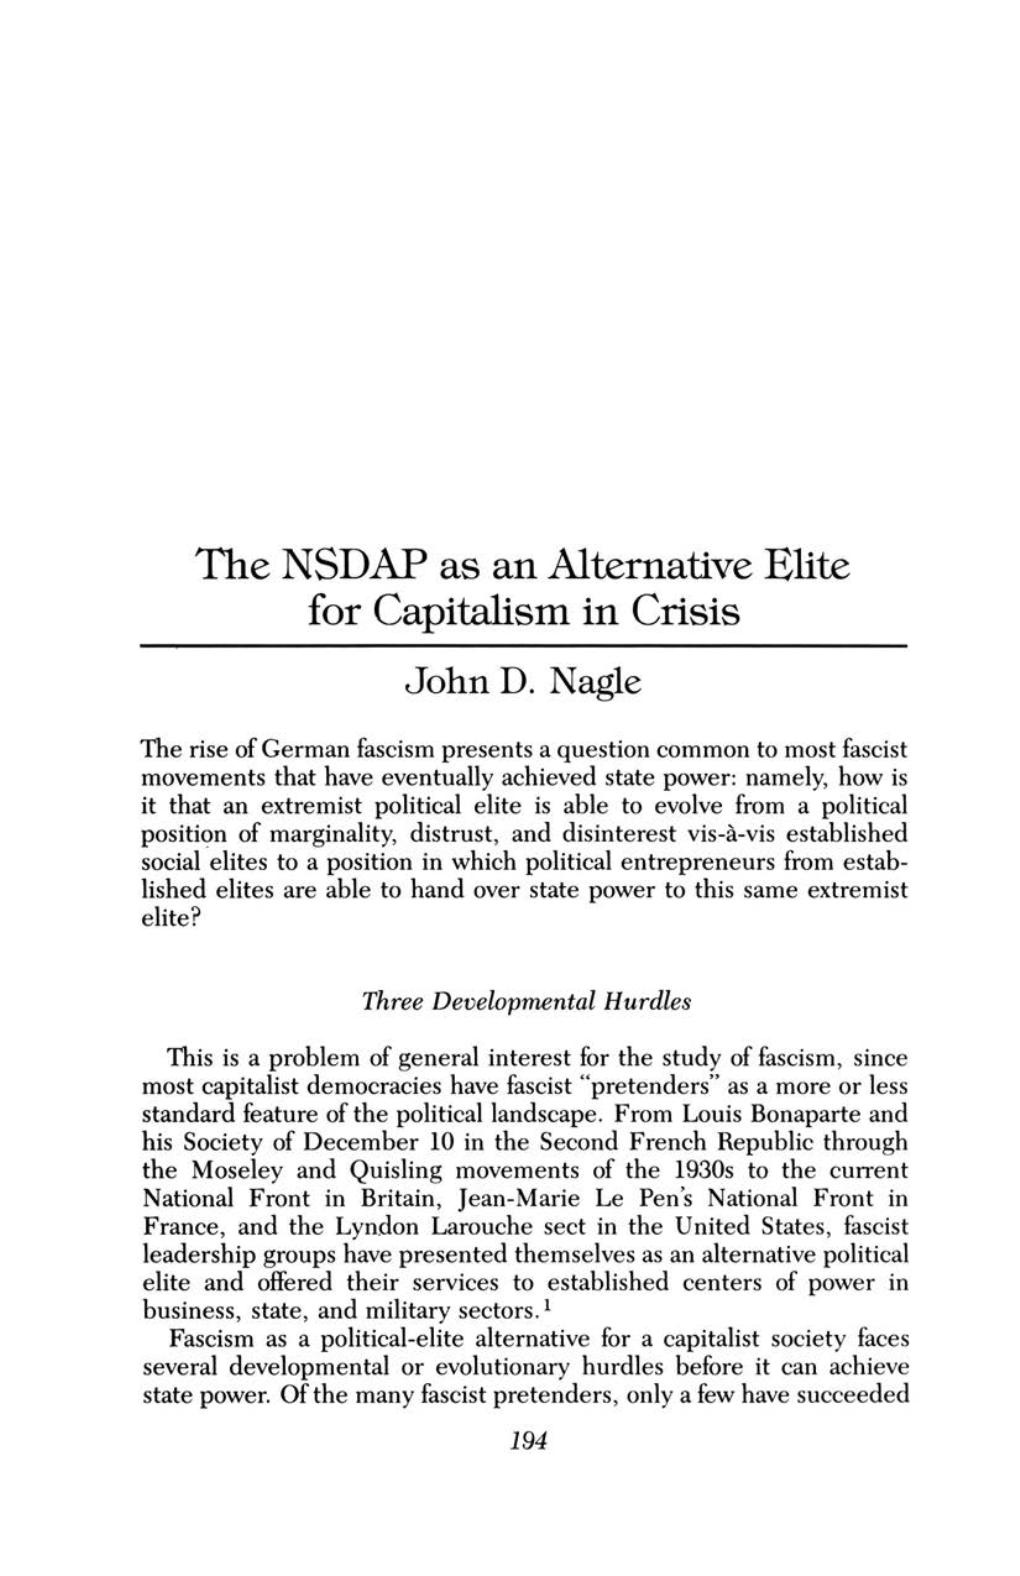 Tue NSDAP As an Alternative Elite F Or Capitalism in Crisis John D